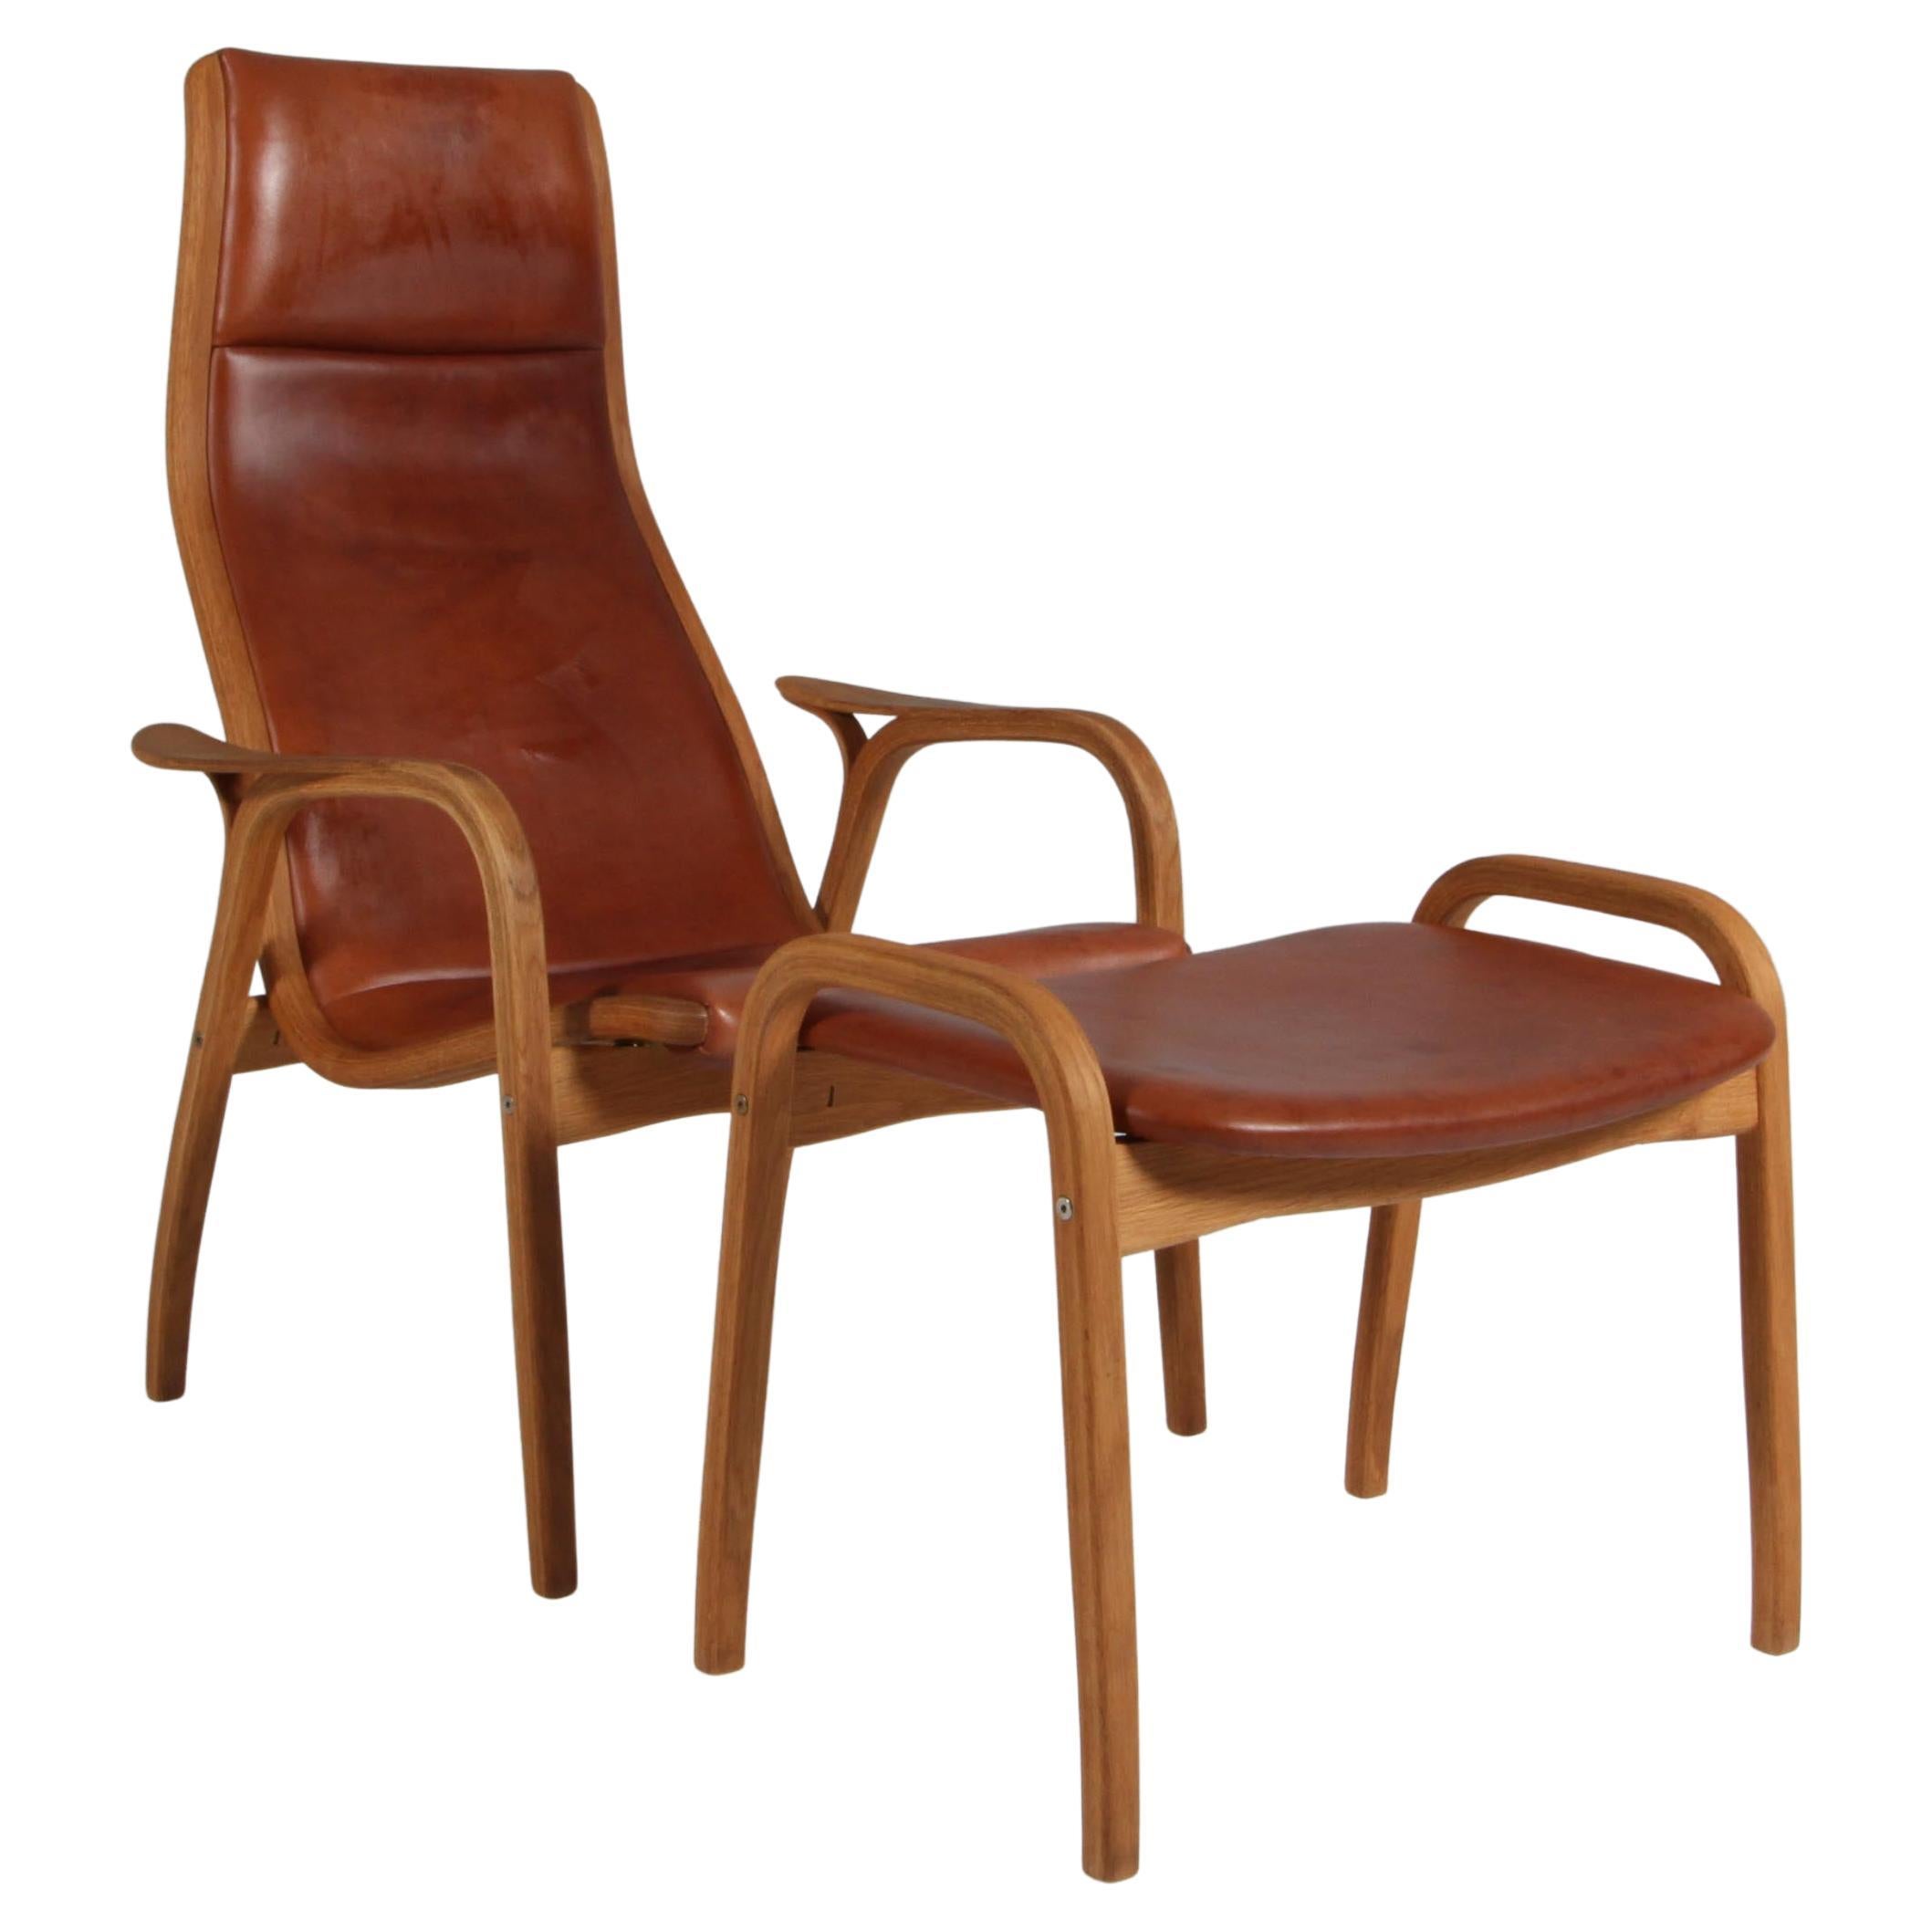 Yngve Ekström, "Lamino" Lounge Chair with ottoman, patinated leather